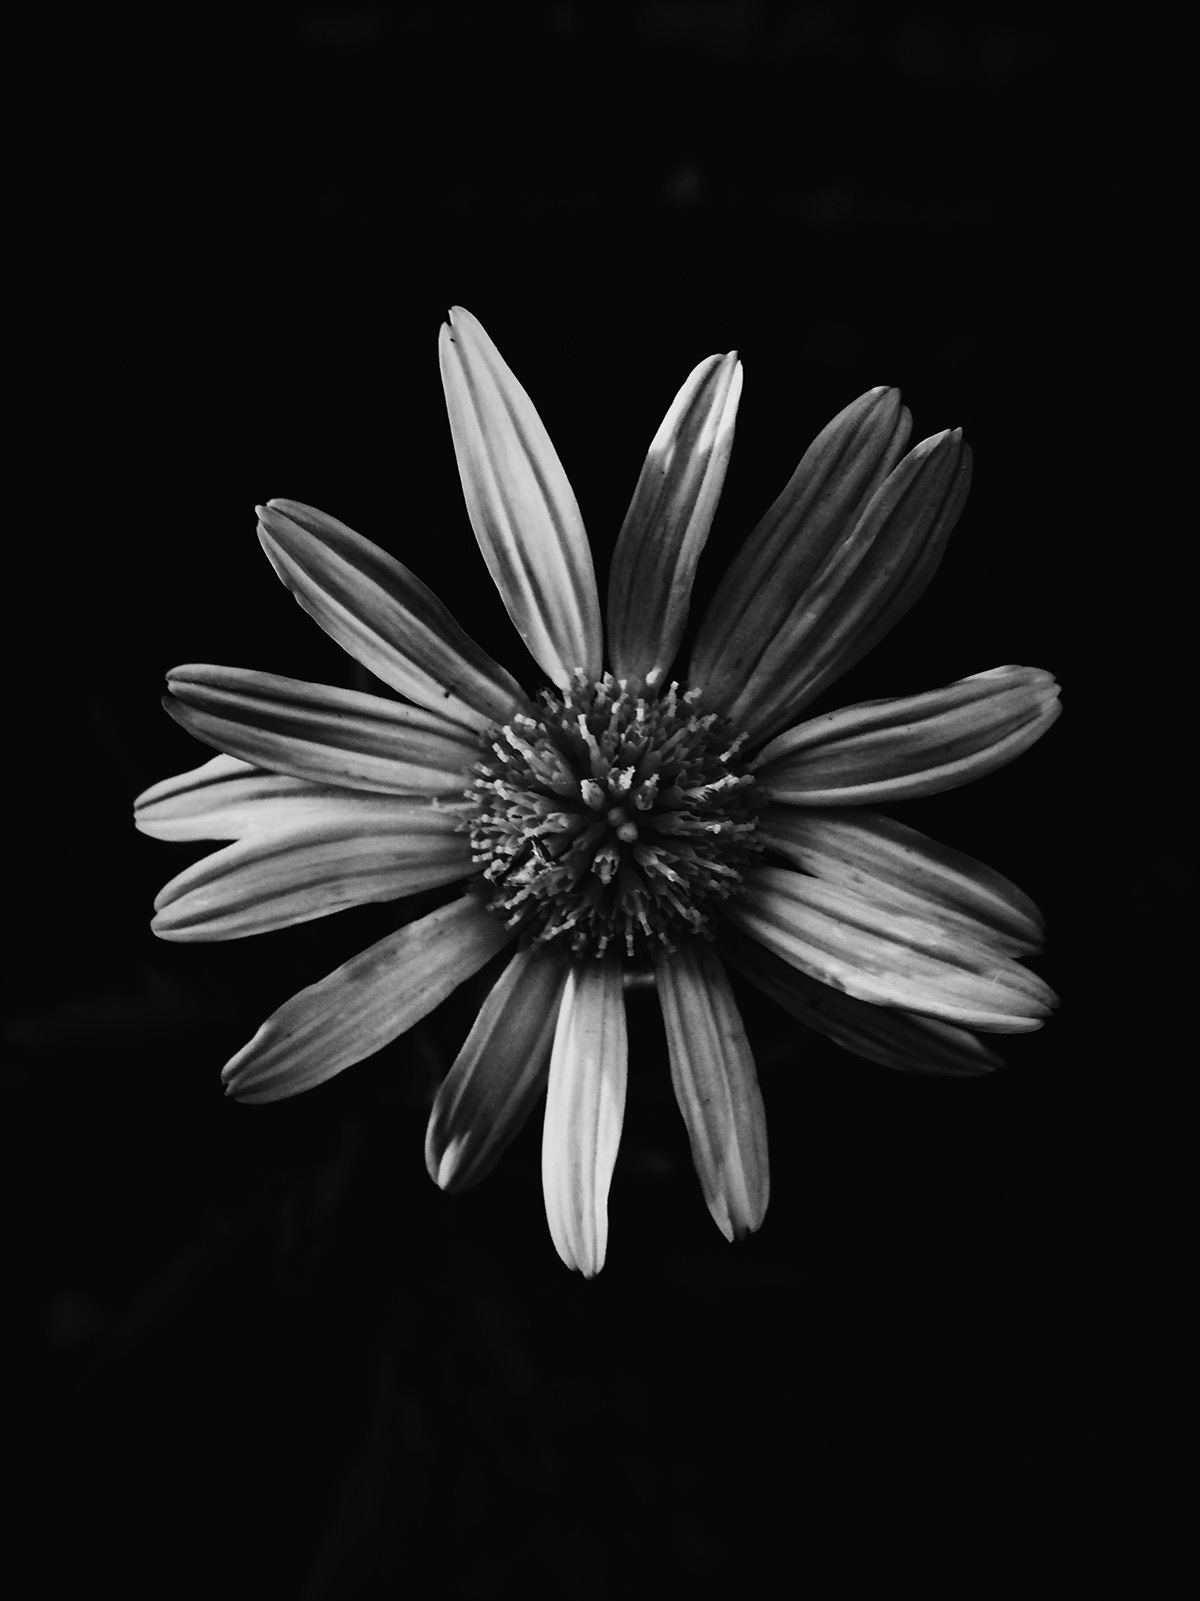 blackandwhite Flowers Nature portraits photo FINEART